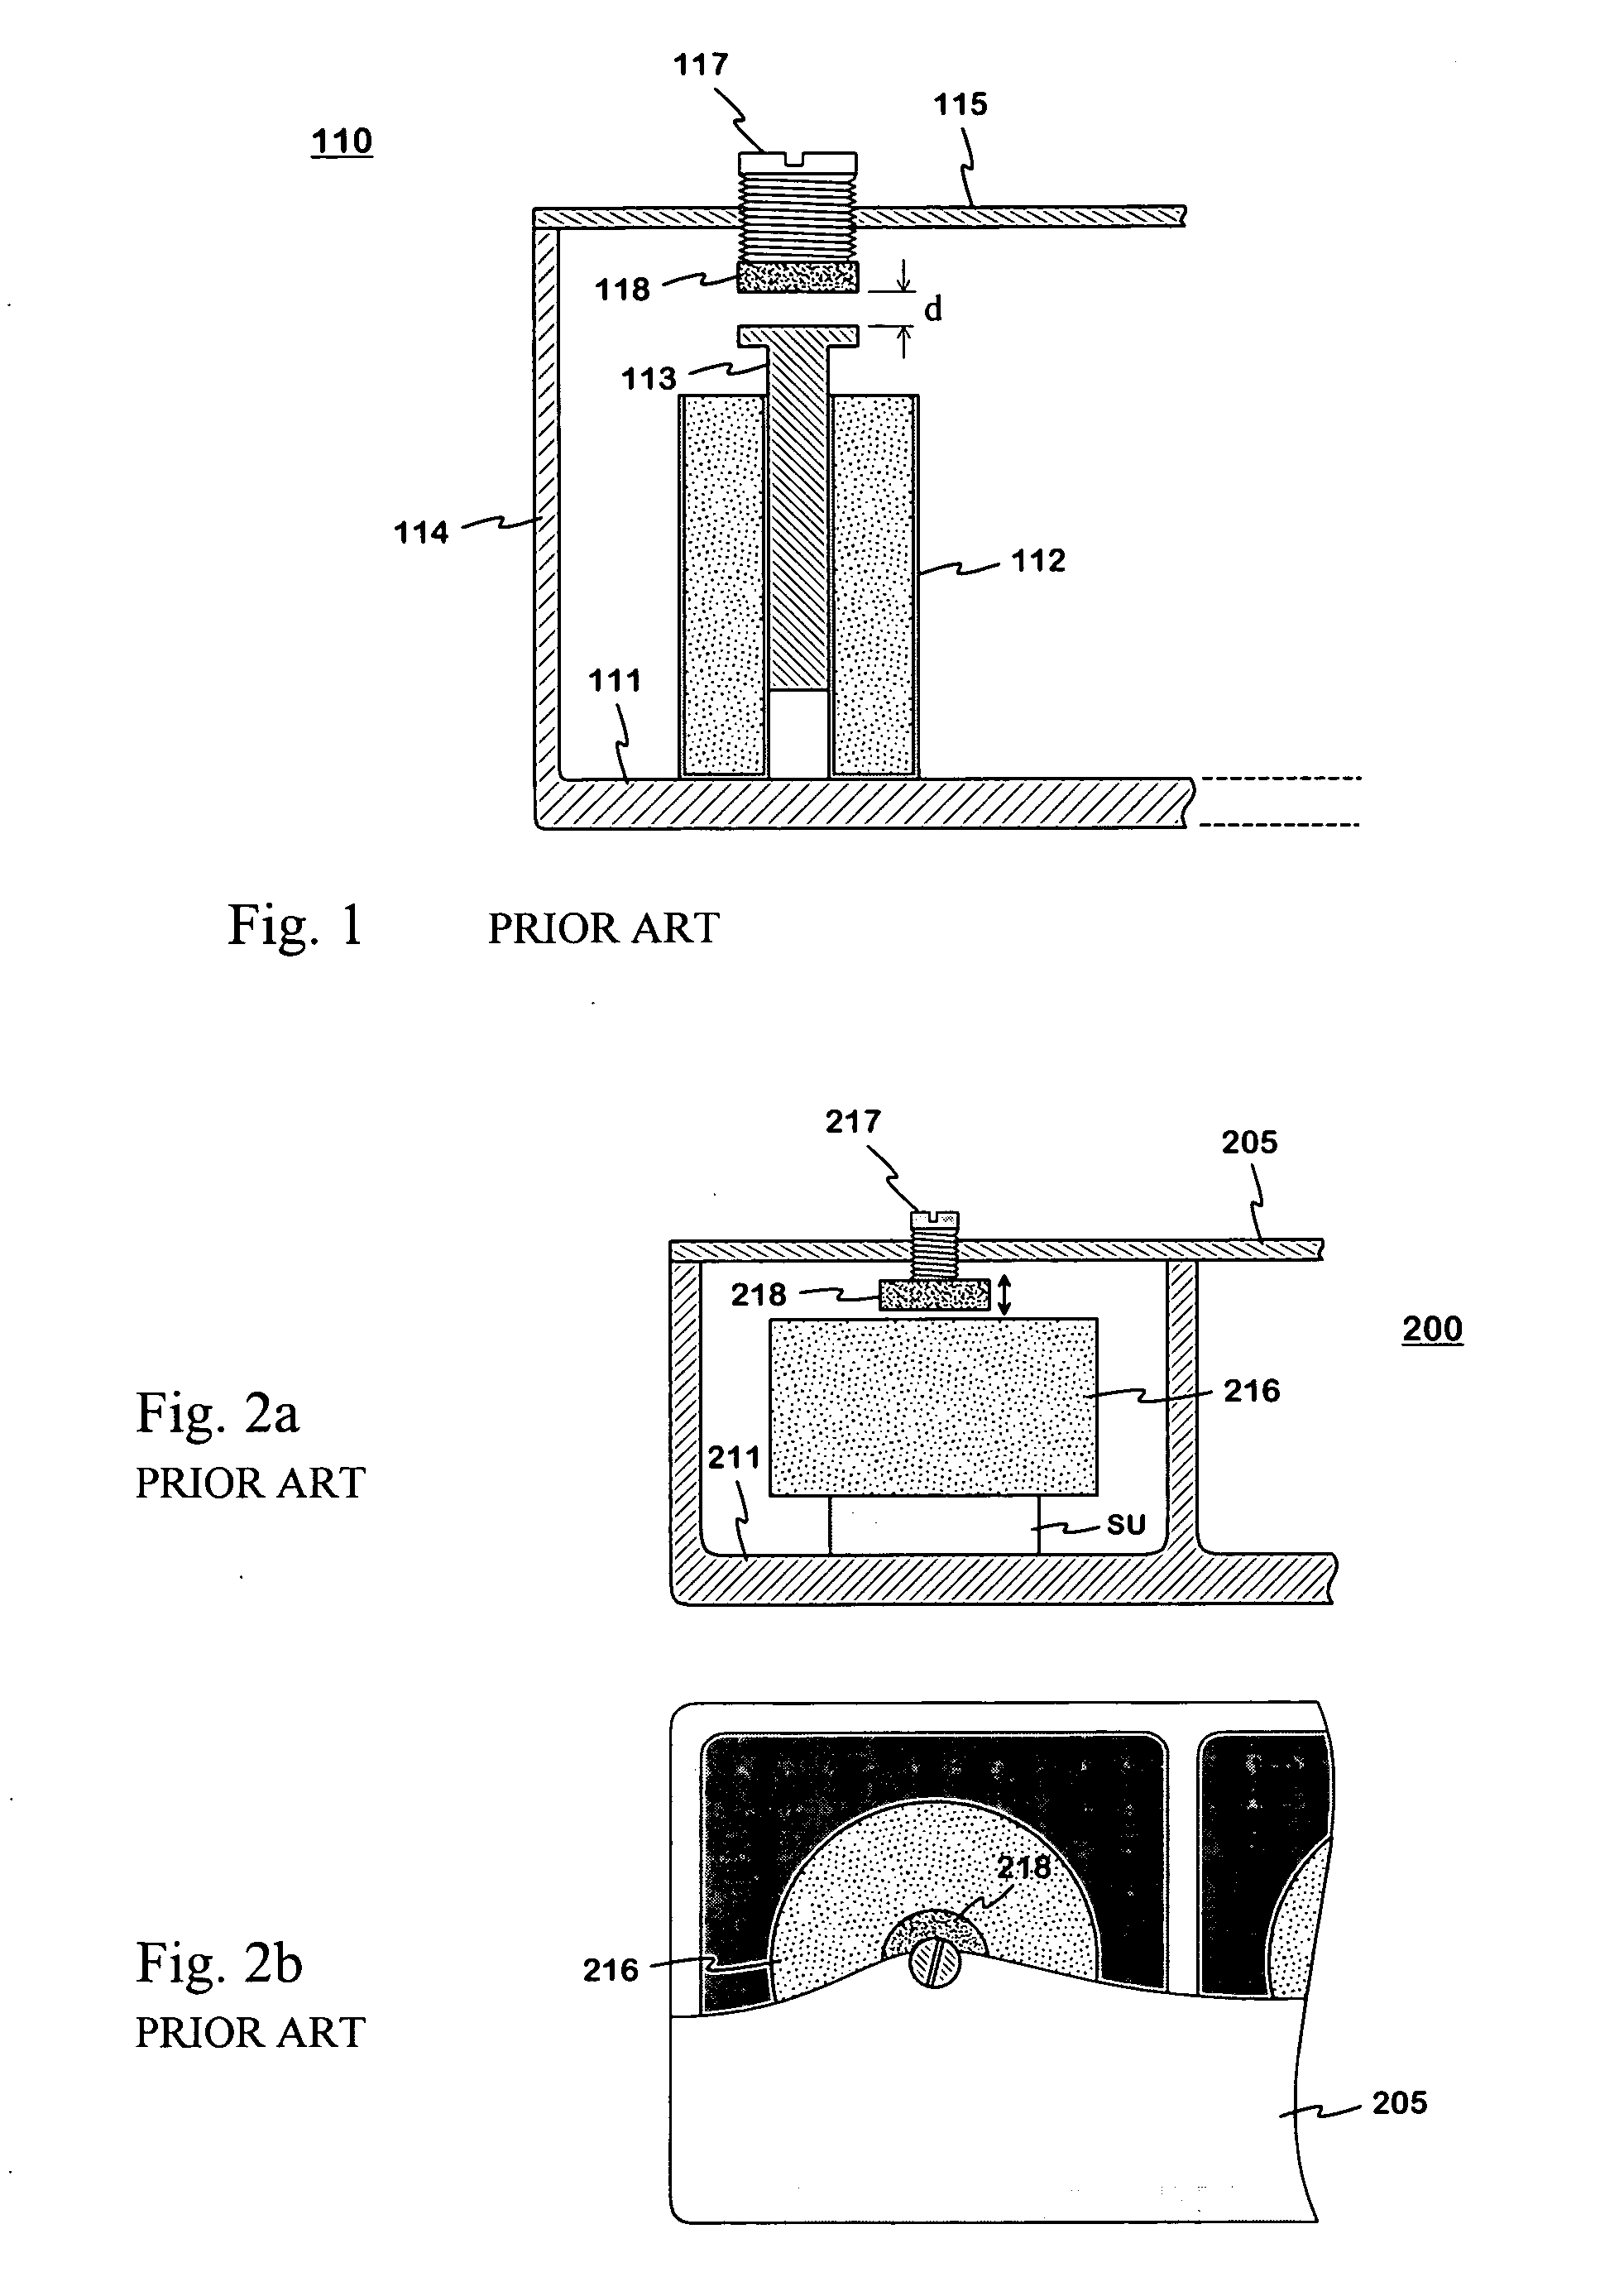 Resonator filter